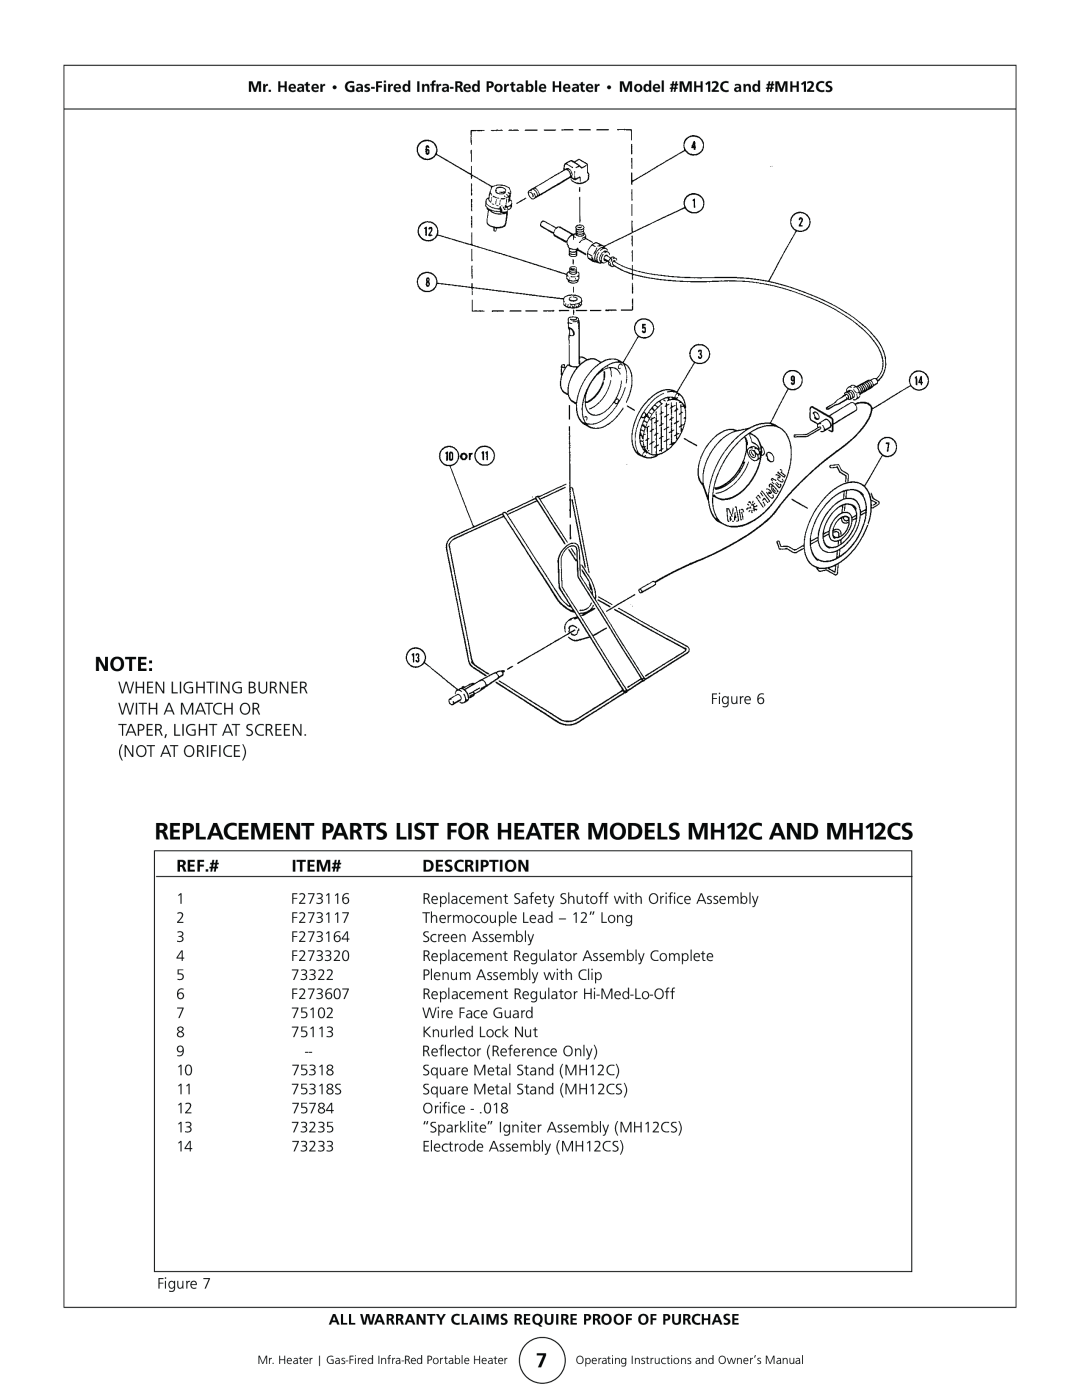 Enerco MH12CS owner manual When Lighting Burner, Ref.#, Item#, Description 